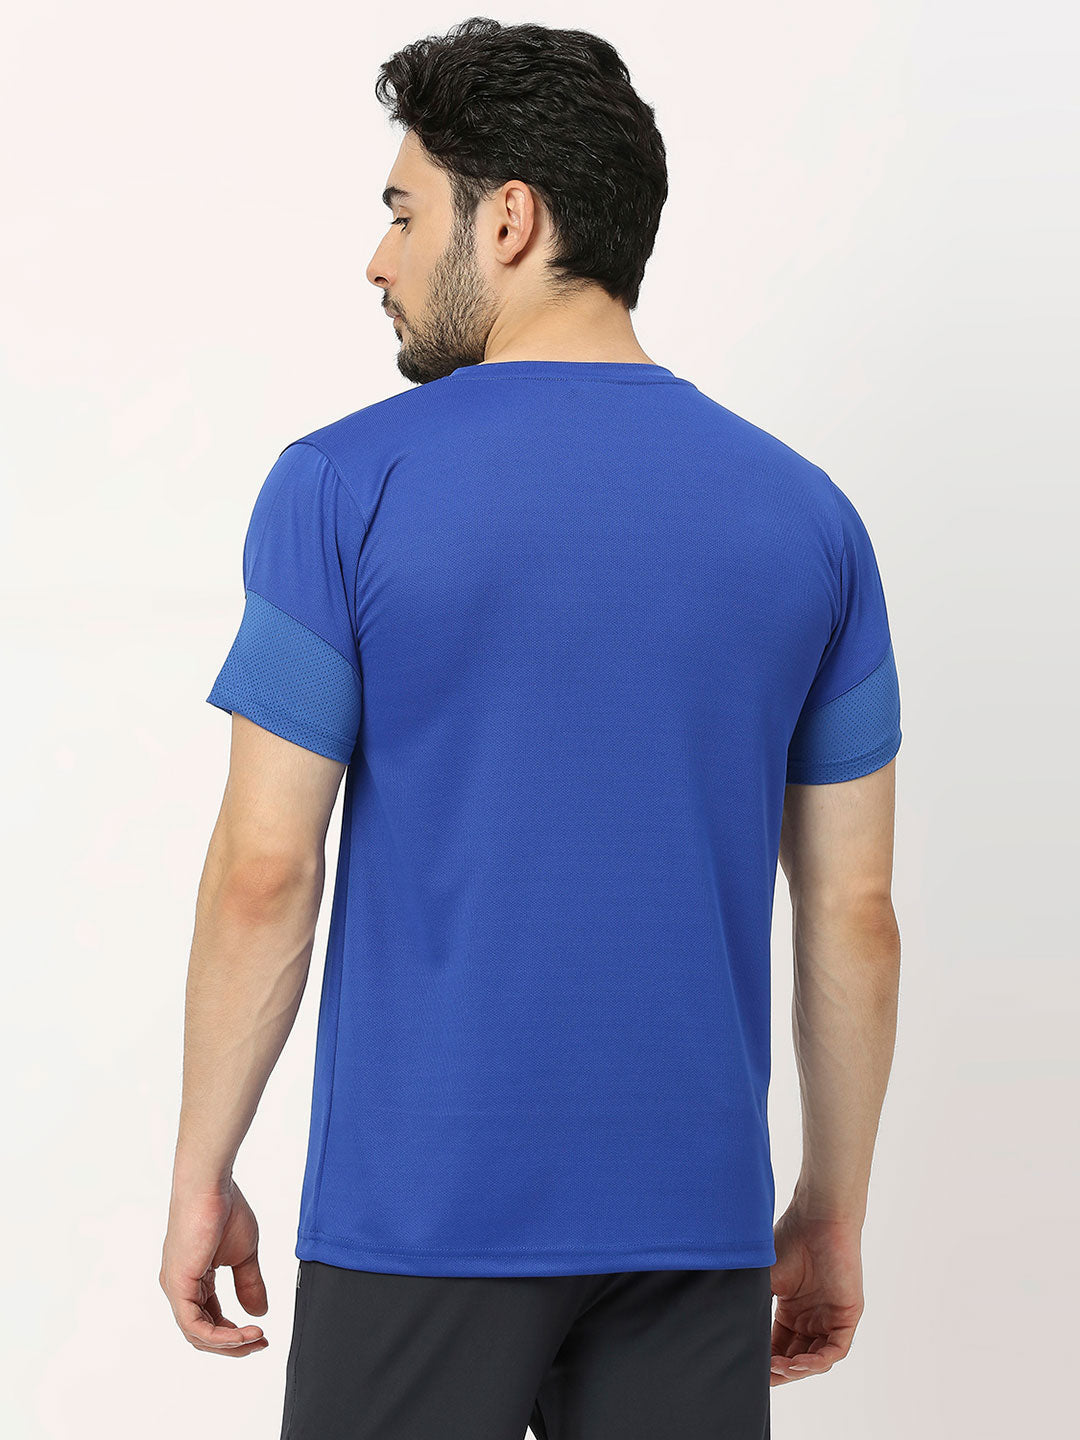 Men's Sports T-Shirt - Royal Blue - 1